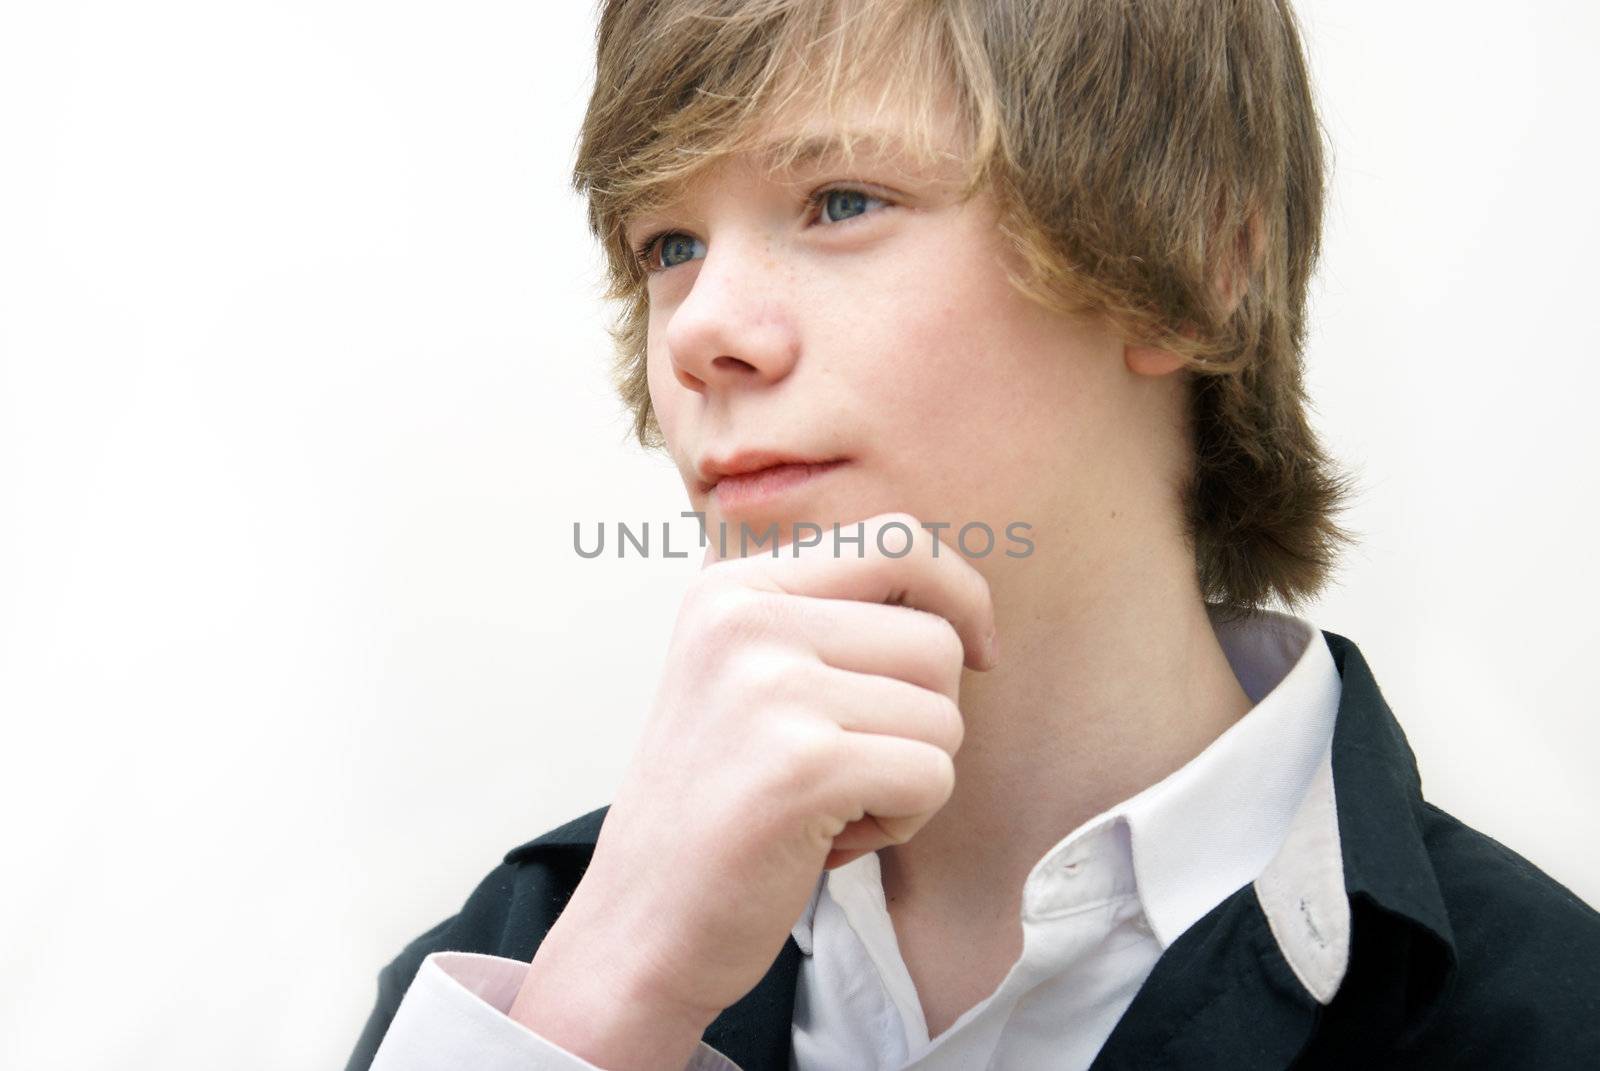 A teenage boy sits and thinks deeply.